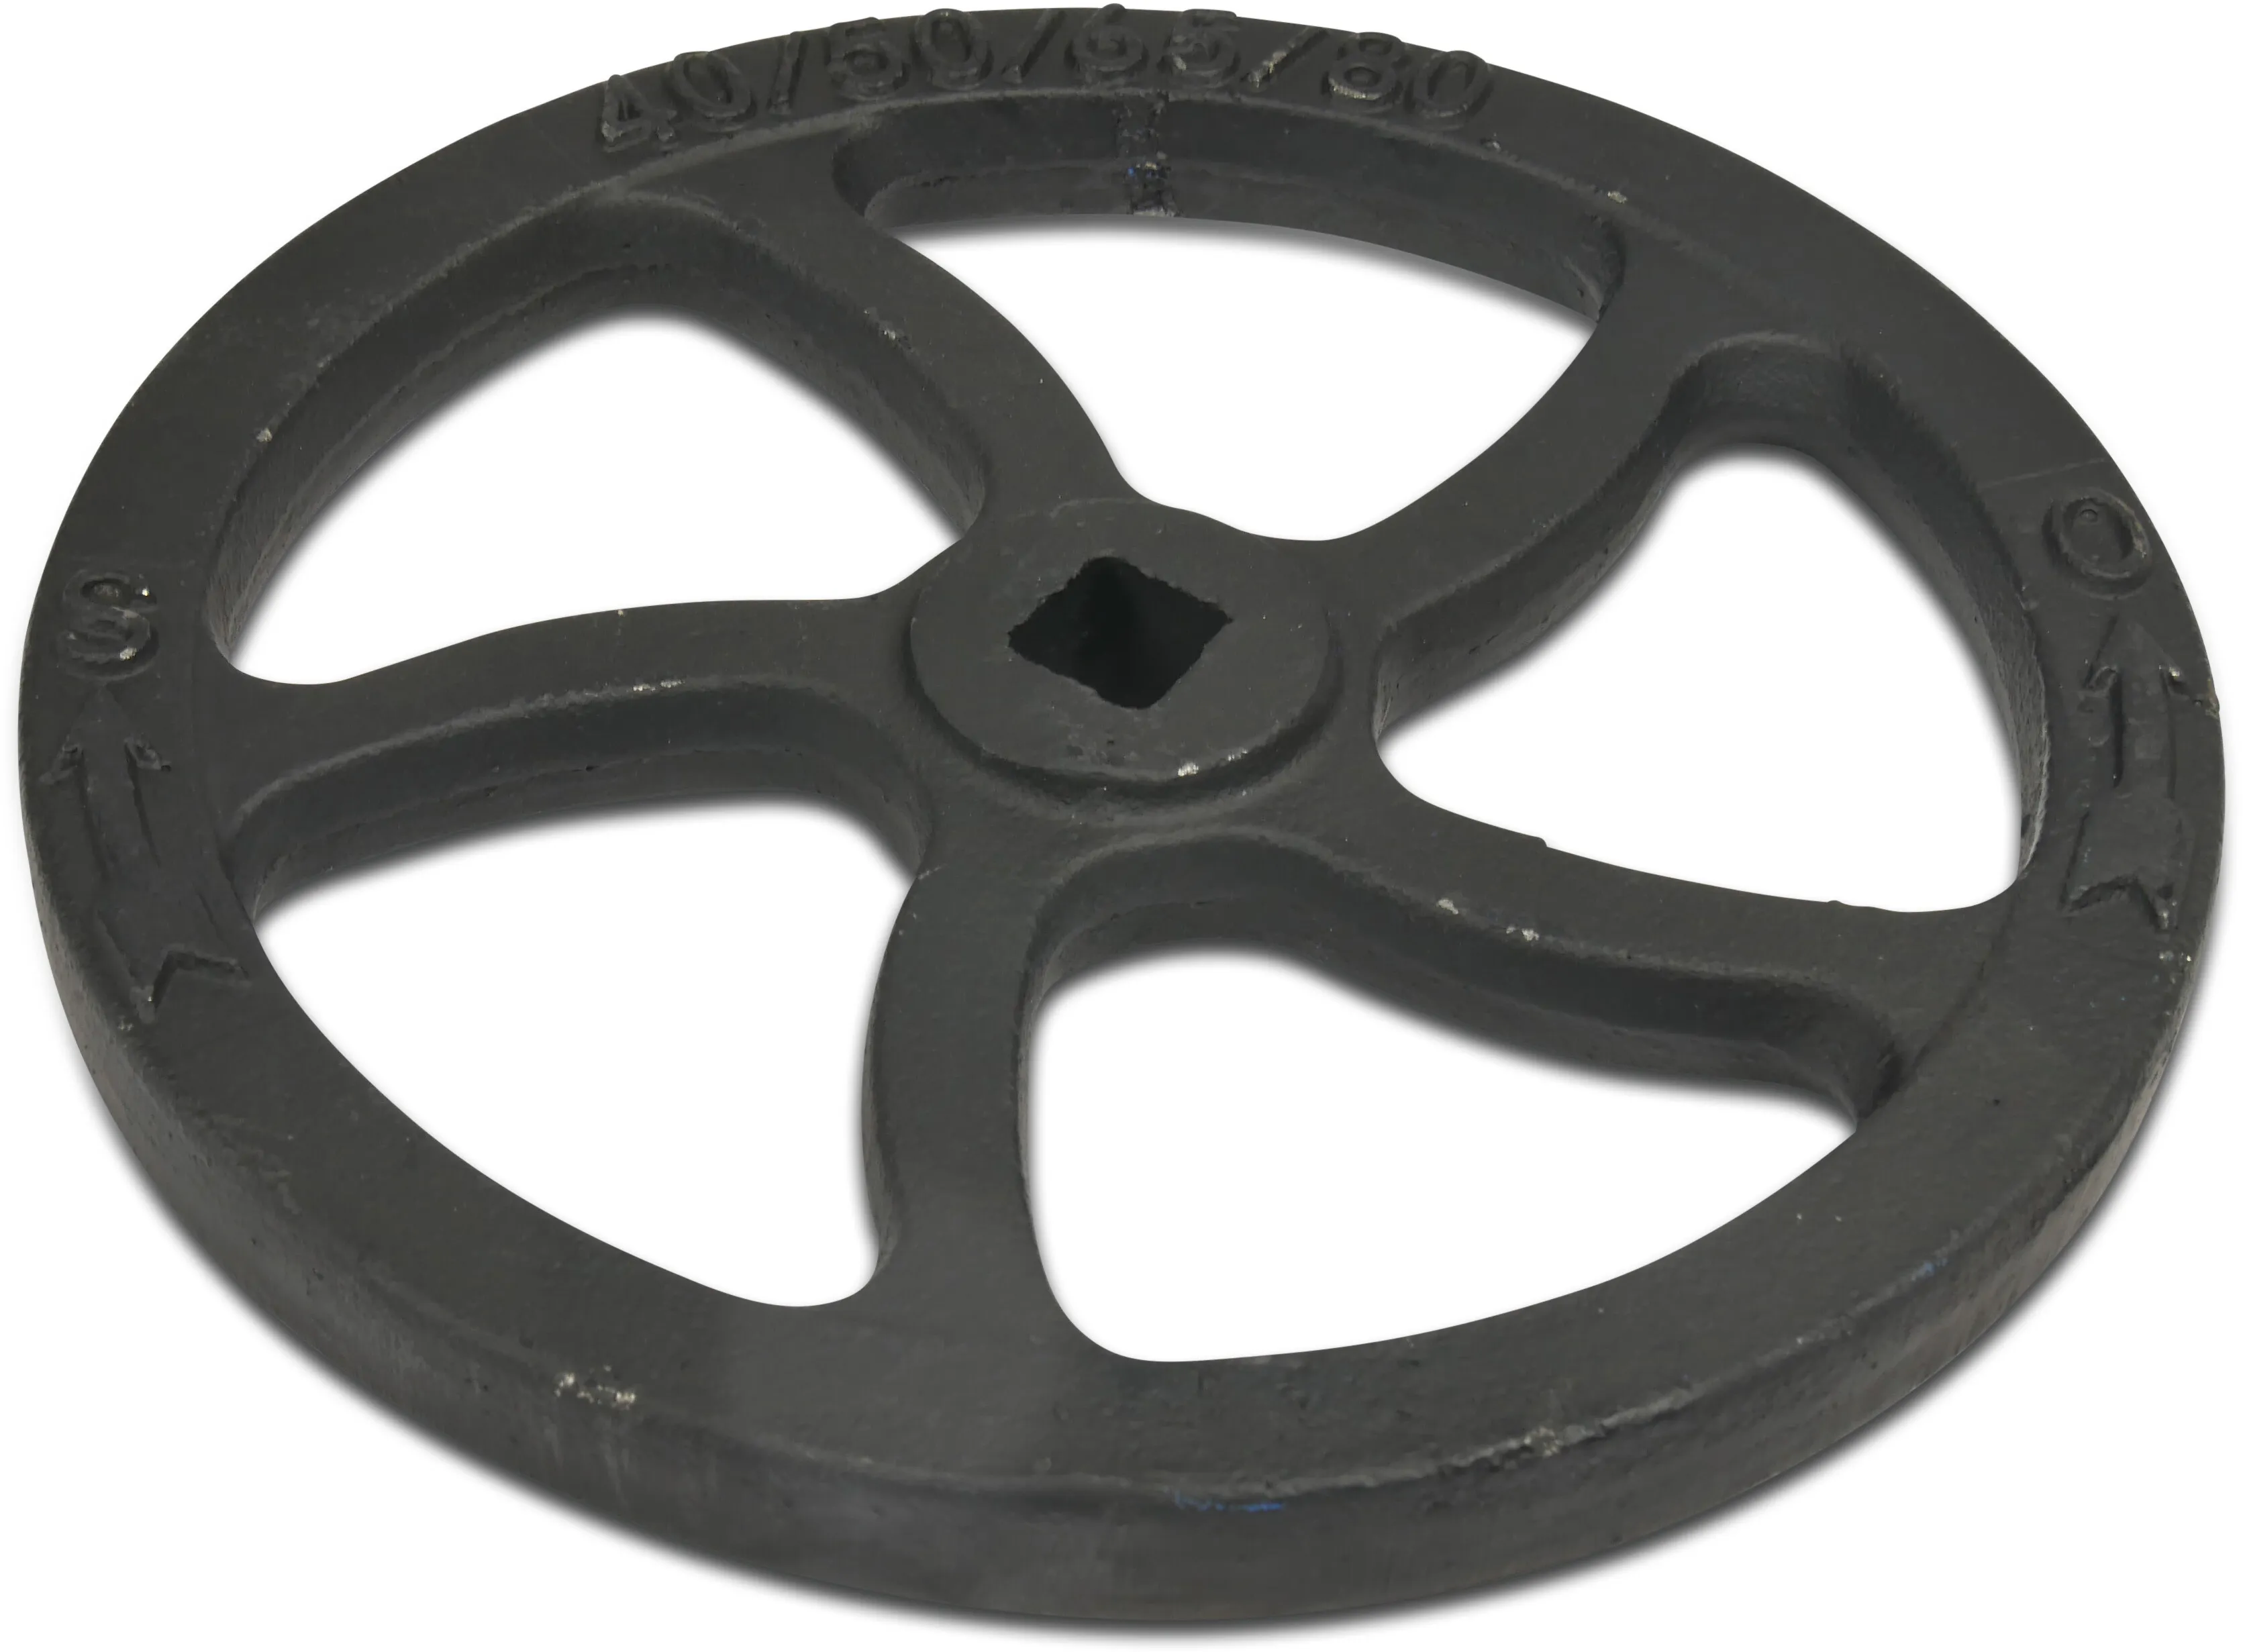 Profec Handwheel cast iron GG 25 160 mm black type 200/N hole 12 x 14mm